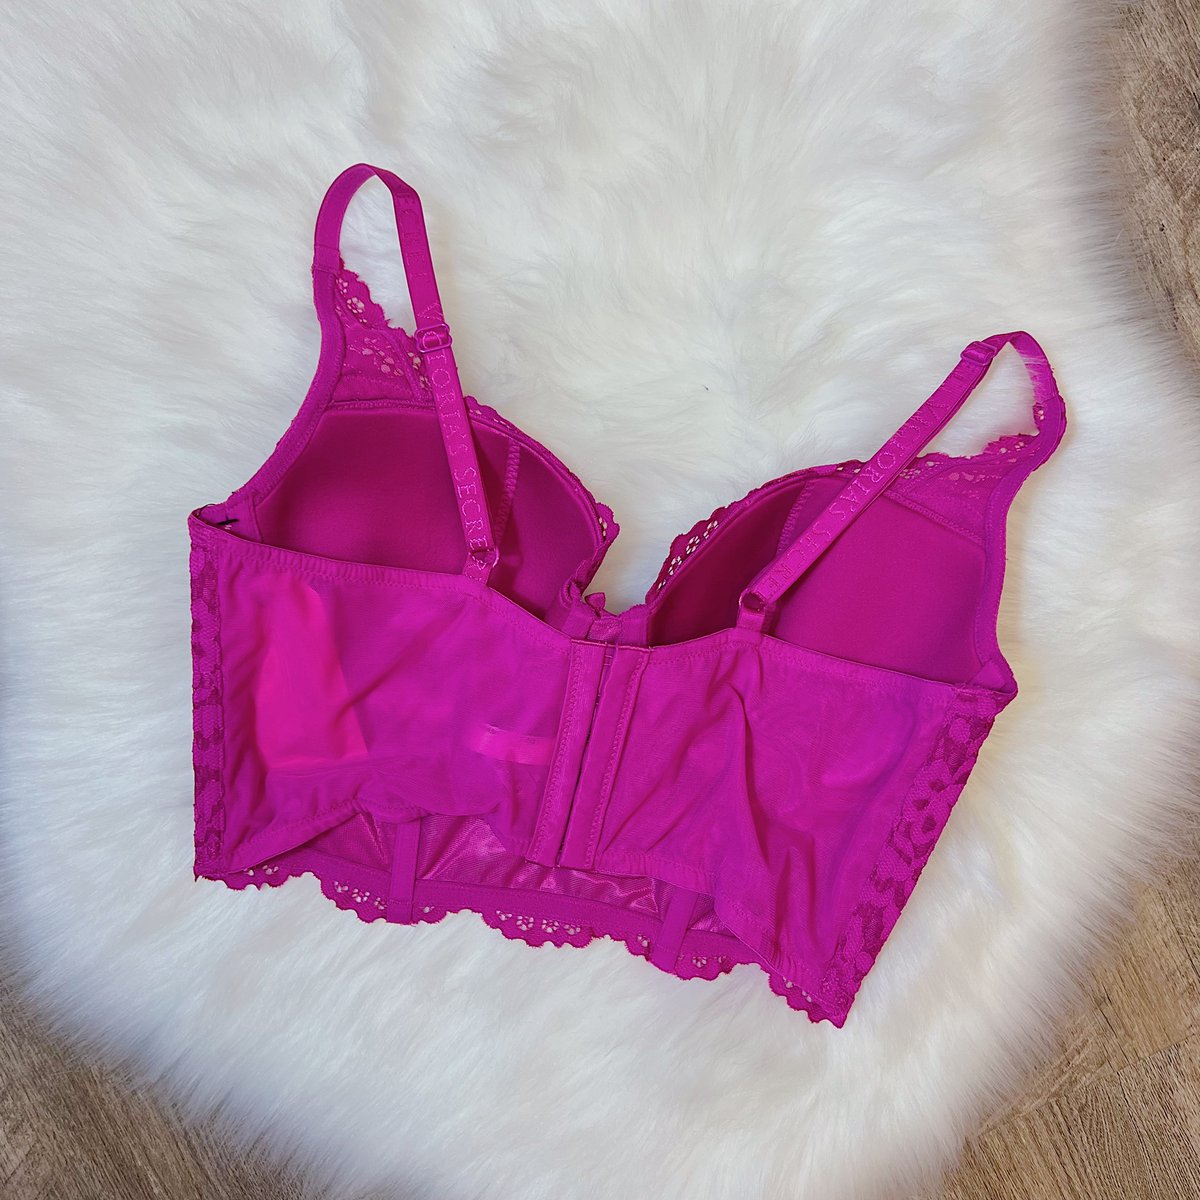 Victoria's Secret Victoria secret bra 36C Pink Size undefined - $19 - From  Brittany